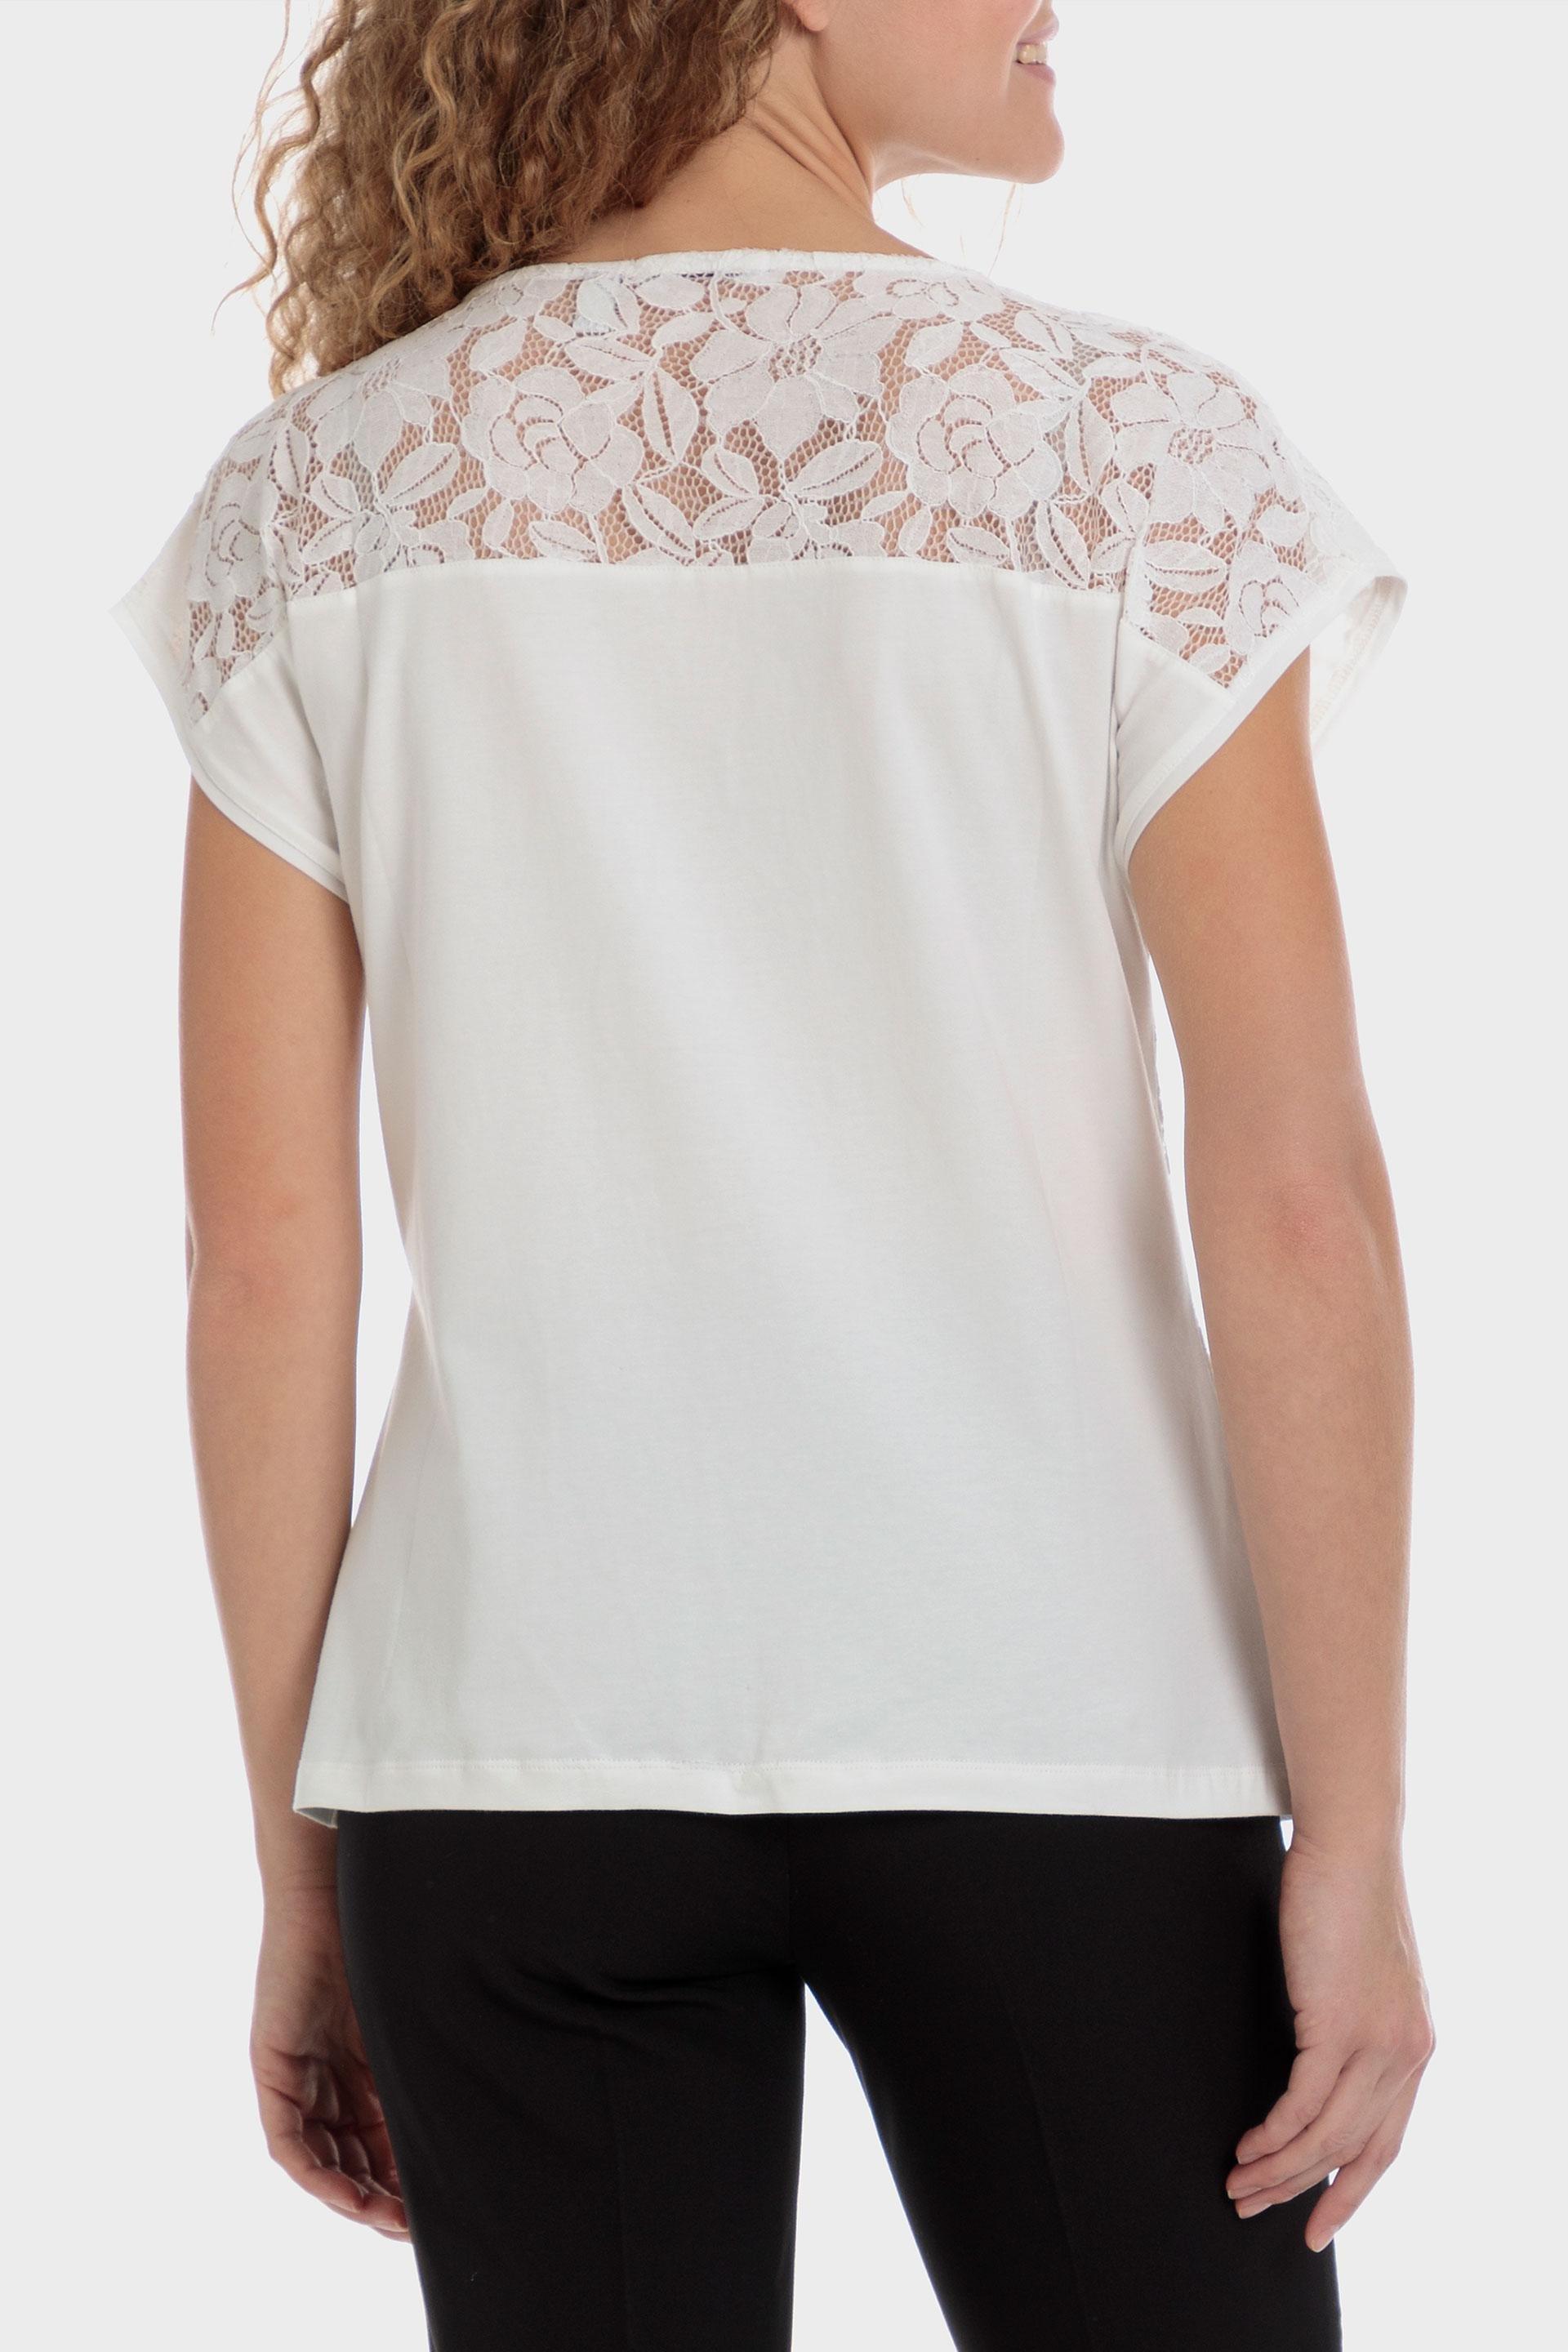 Punt Roma - White Lace T-Shirt